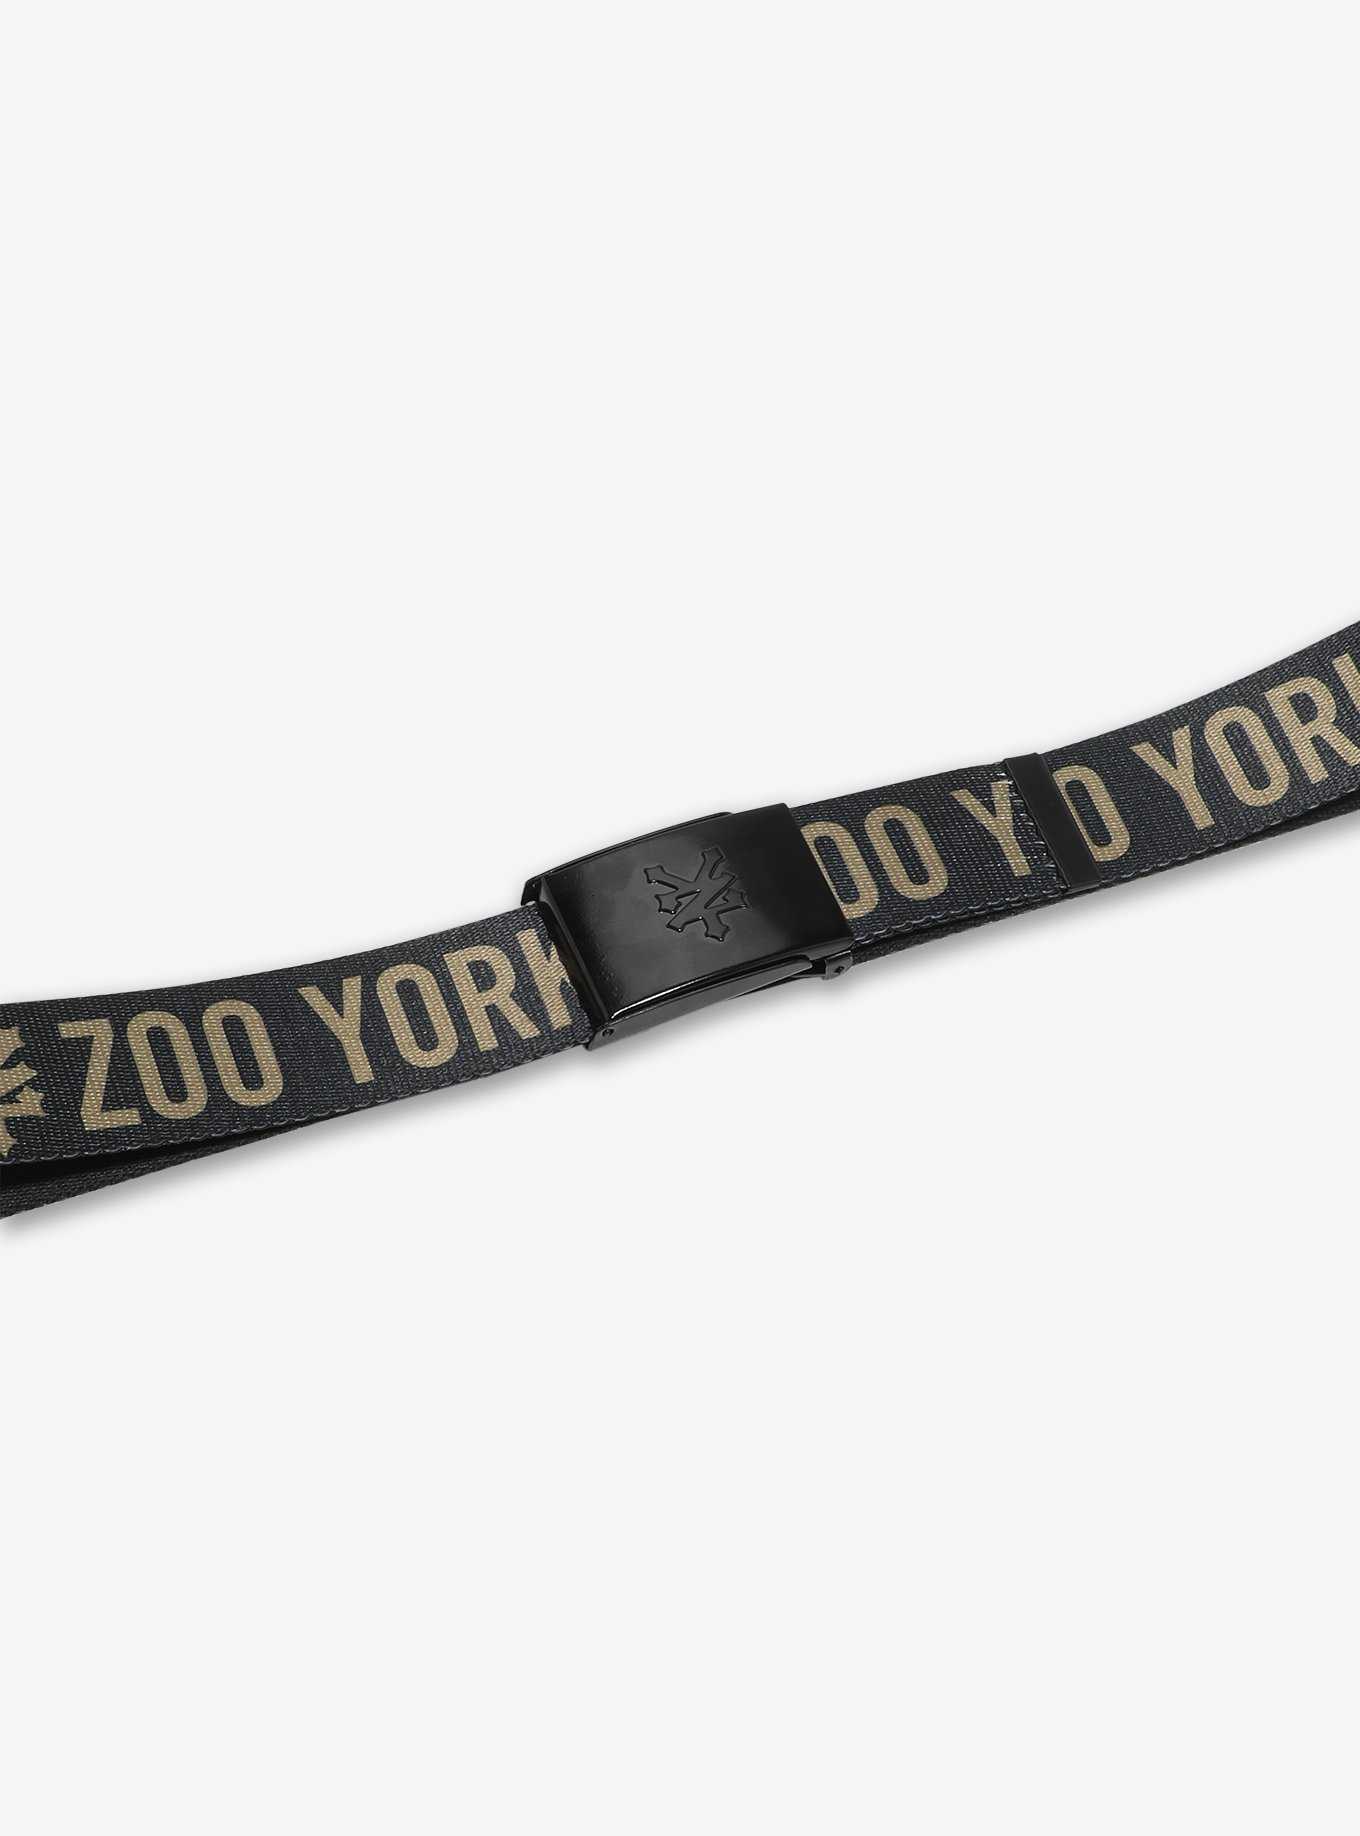 Zoo York Logo Belt, , hi-res